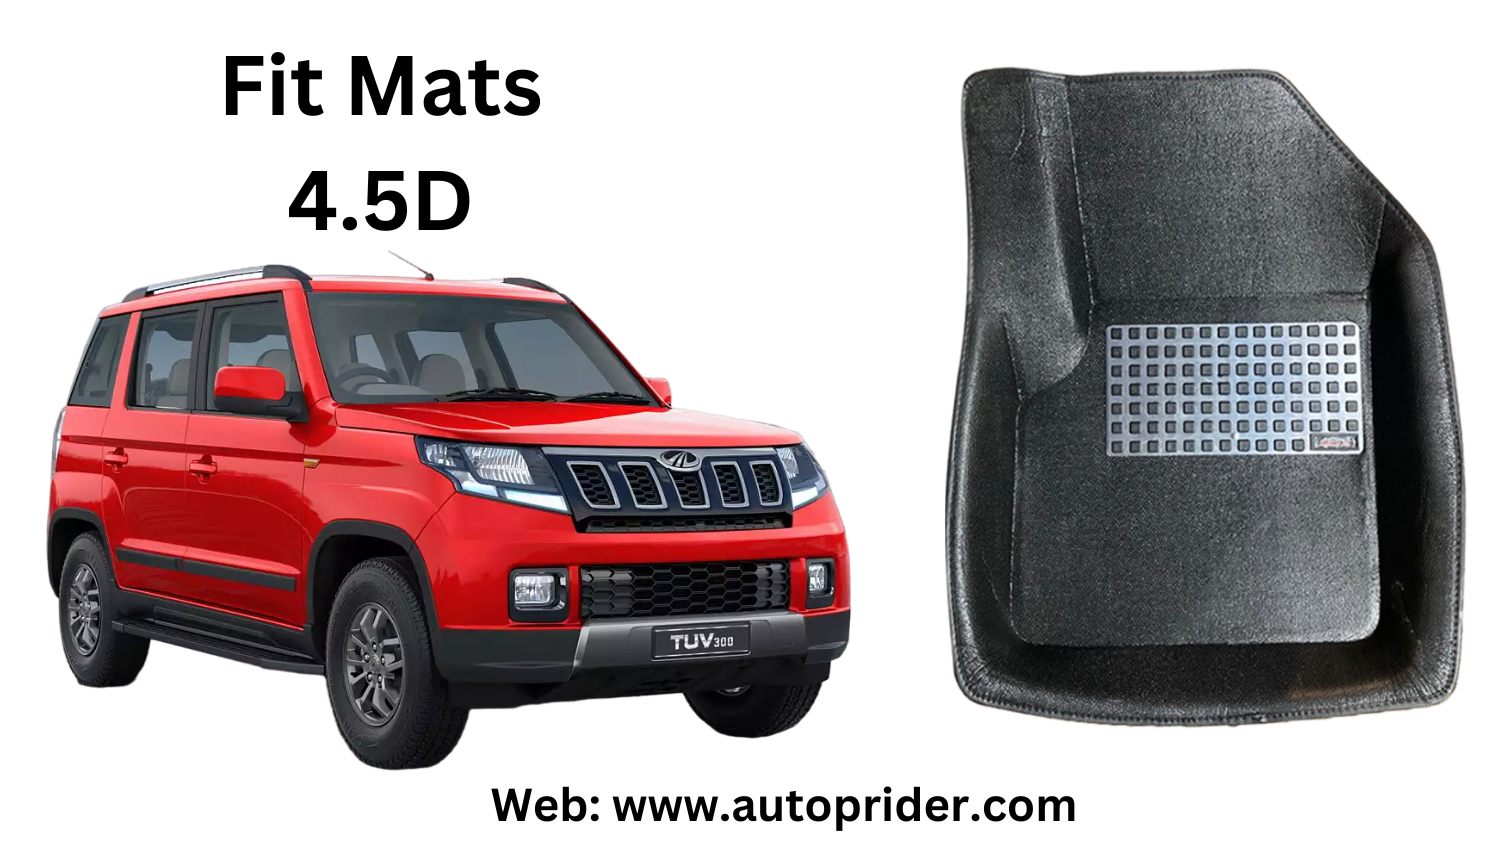 Autoprider | Fit Mats 4.5D Economy Car Mats for Mahindra TUV-300